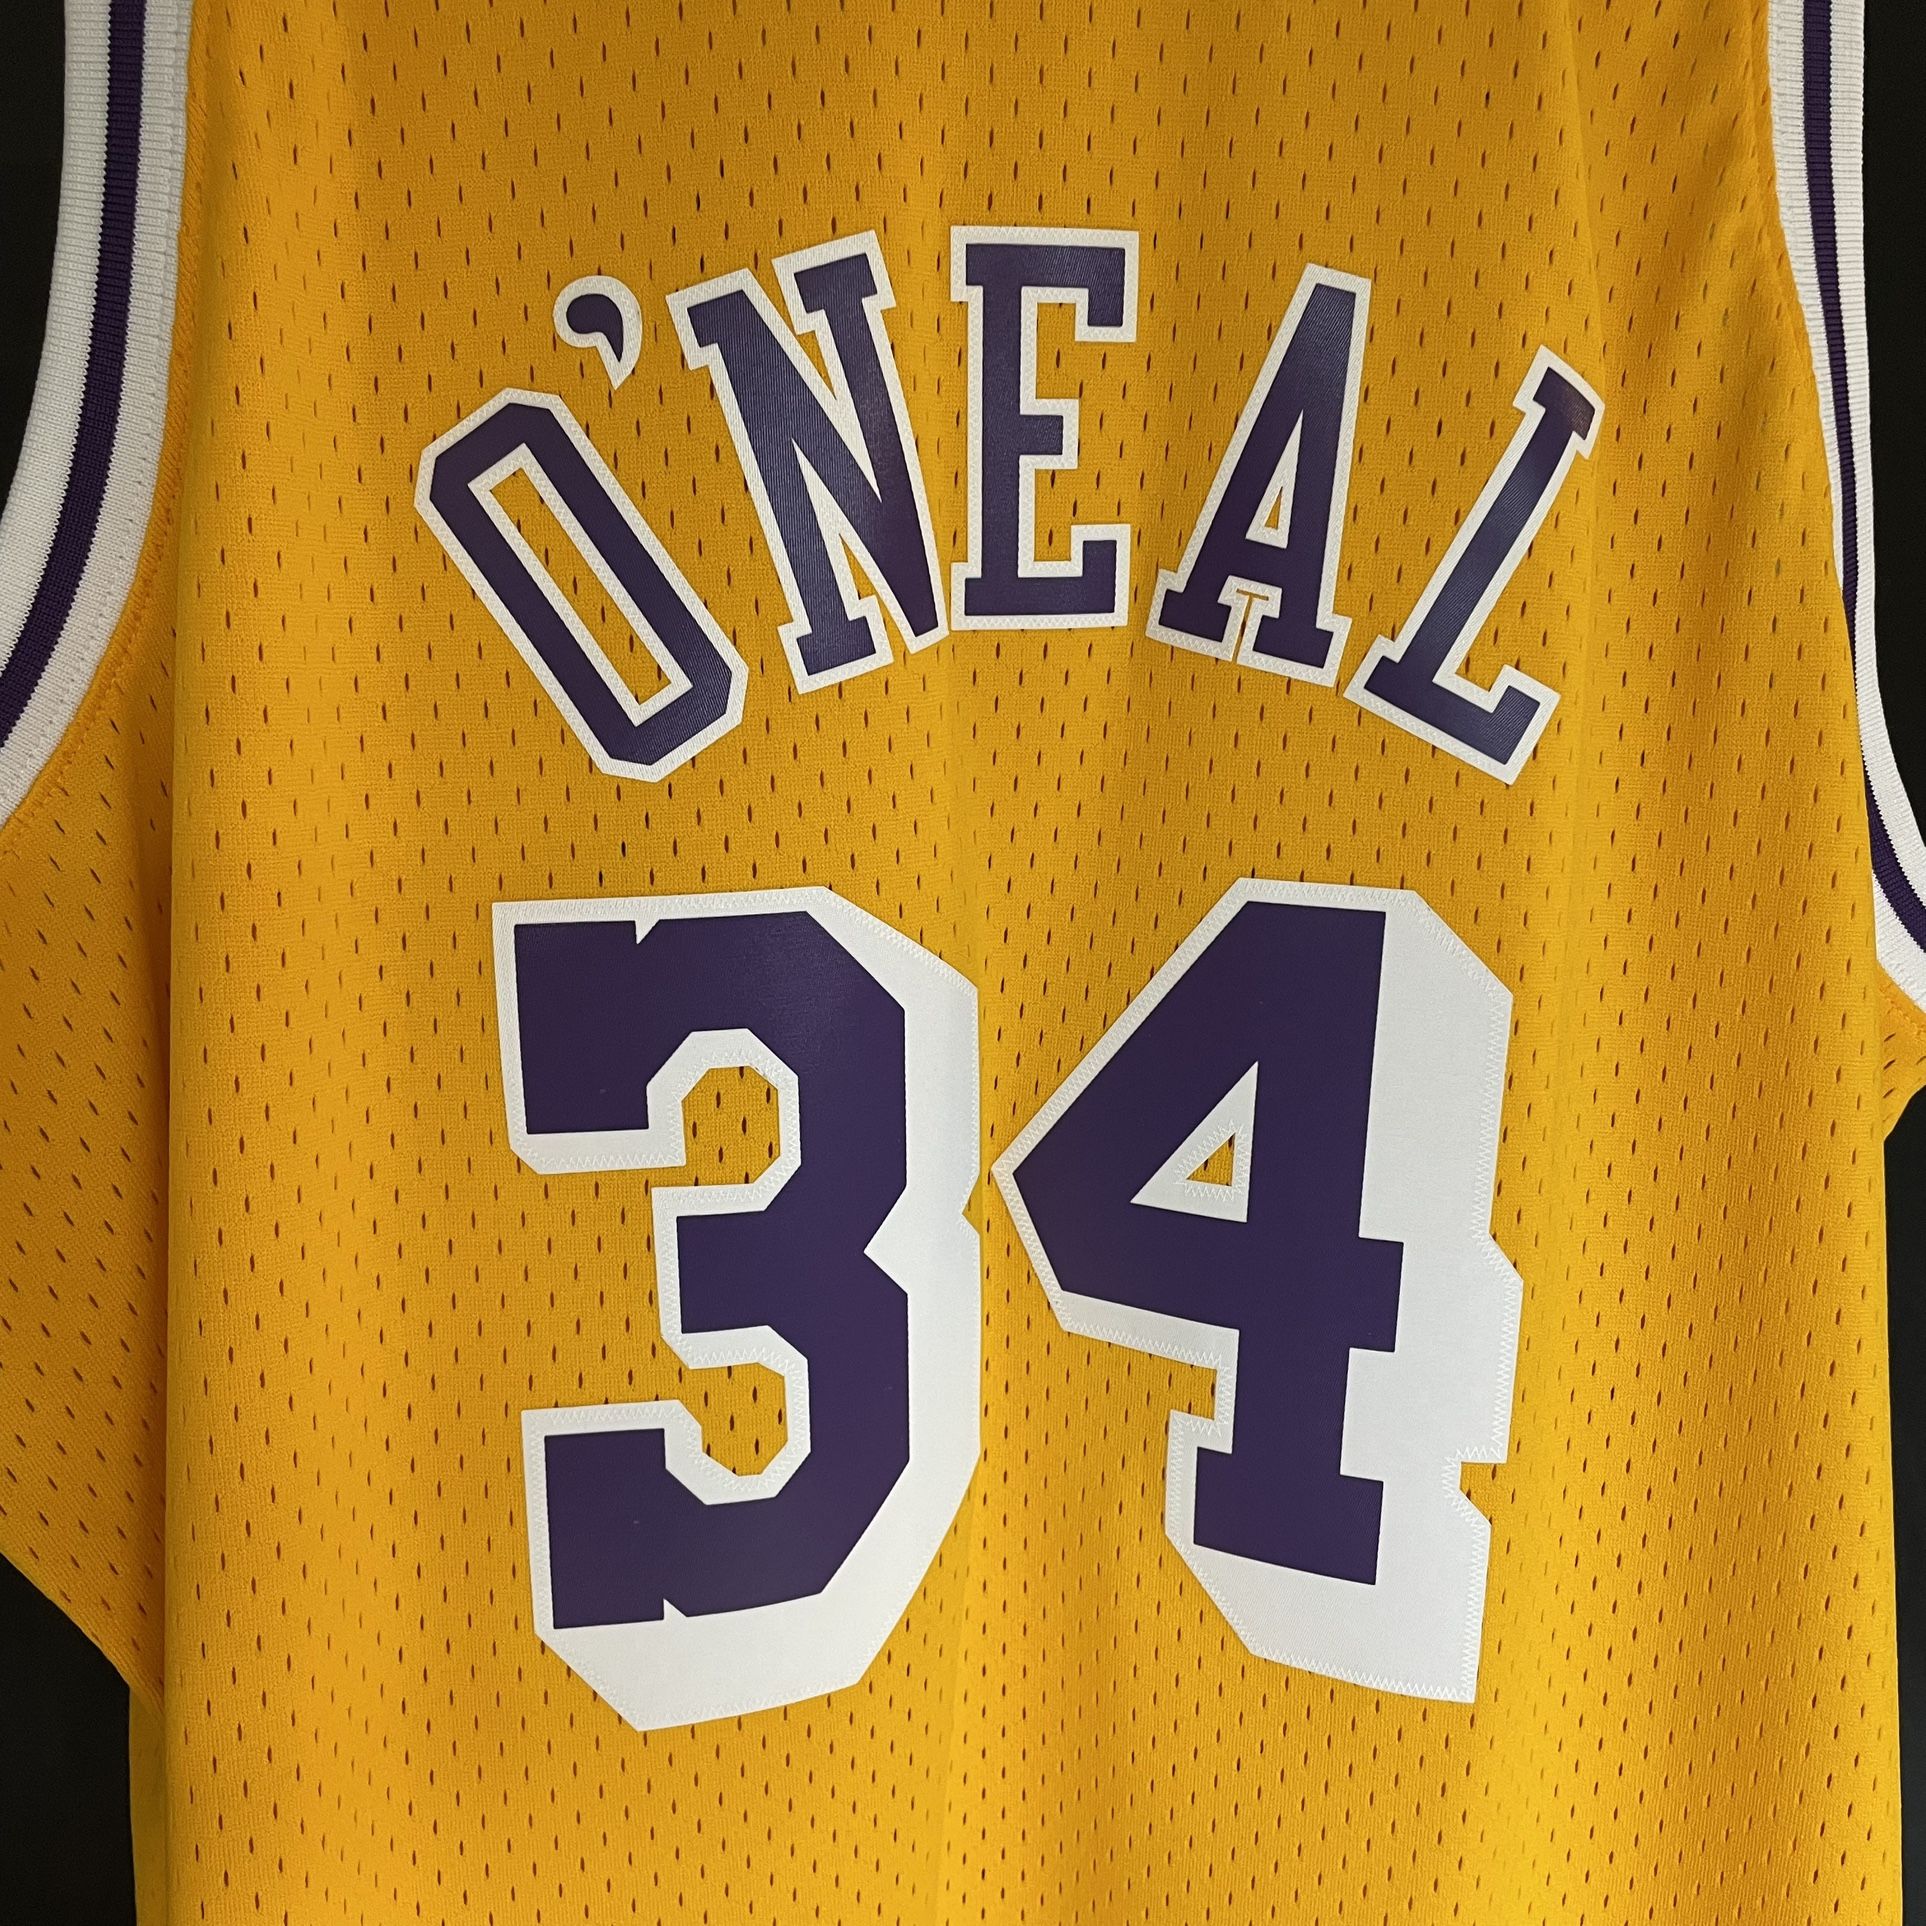 Men's Shaquille O'Neal Los Angeles Lakers Hardwood Classic Swingman Jersey